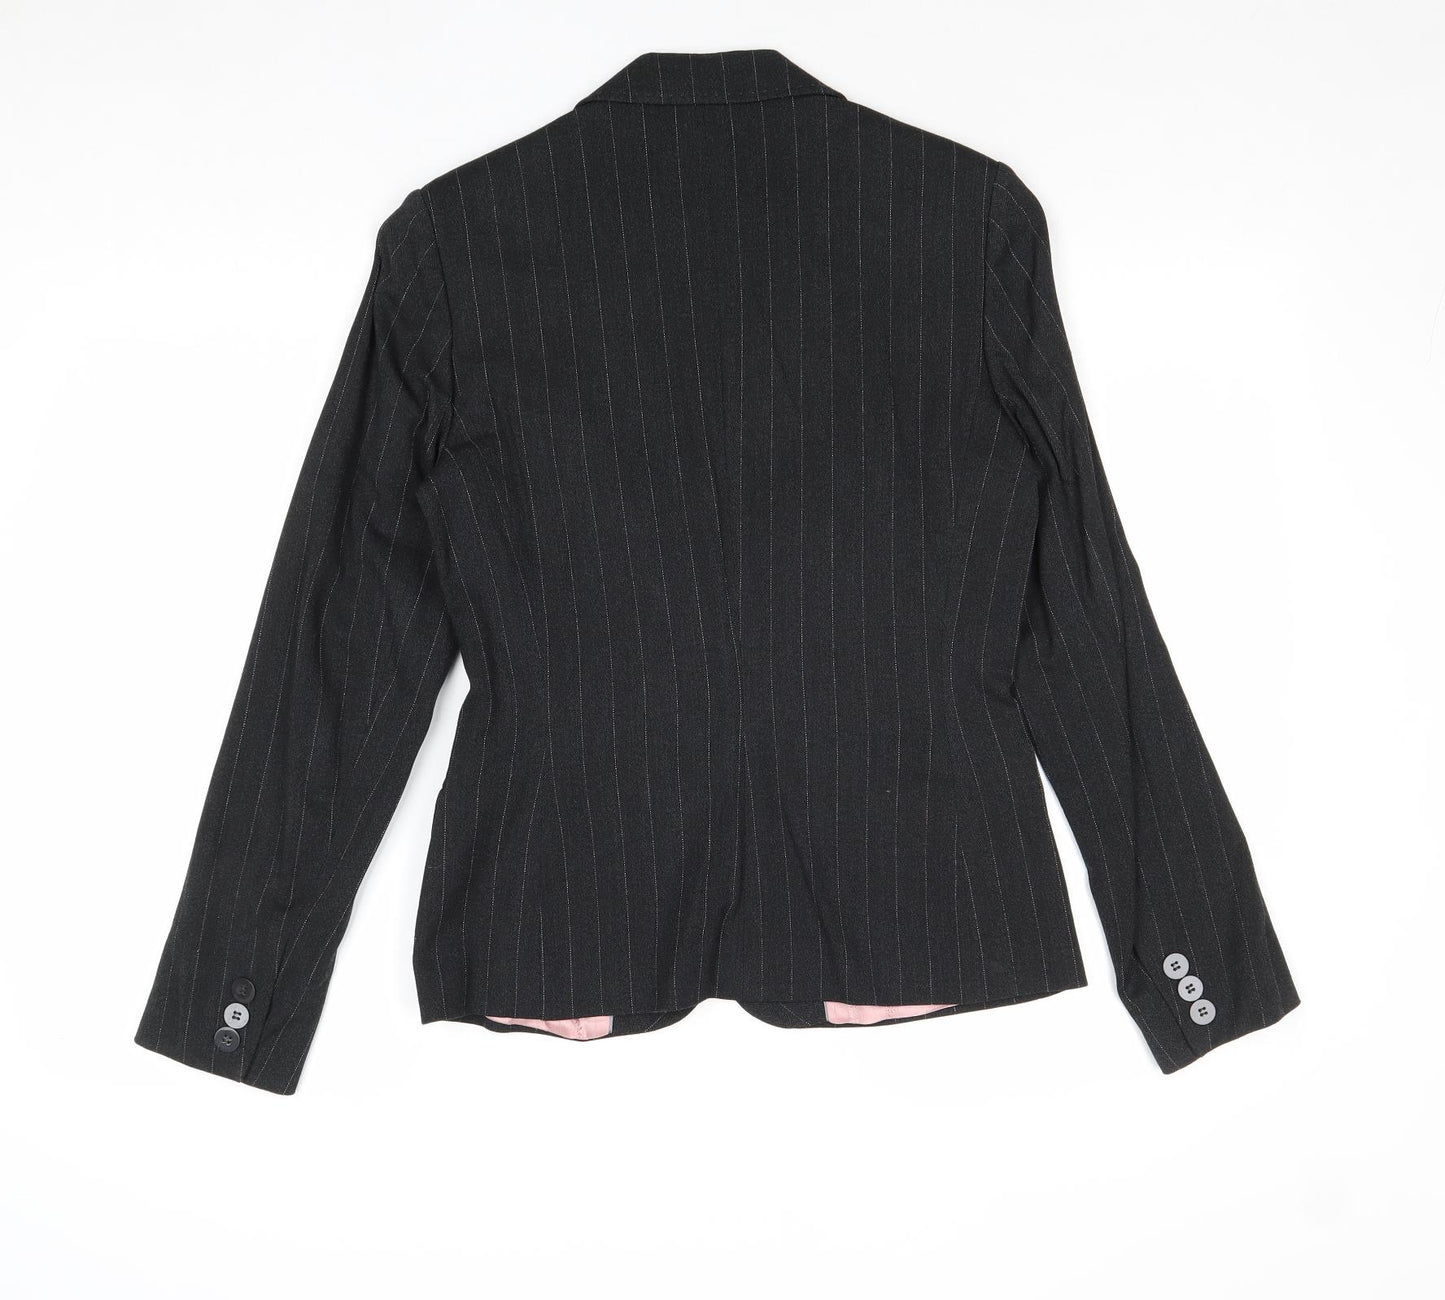 F&F Womens Black Striped Polyester Jacket Suit Jacket Size 10